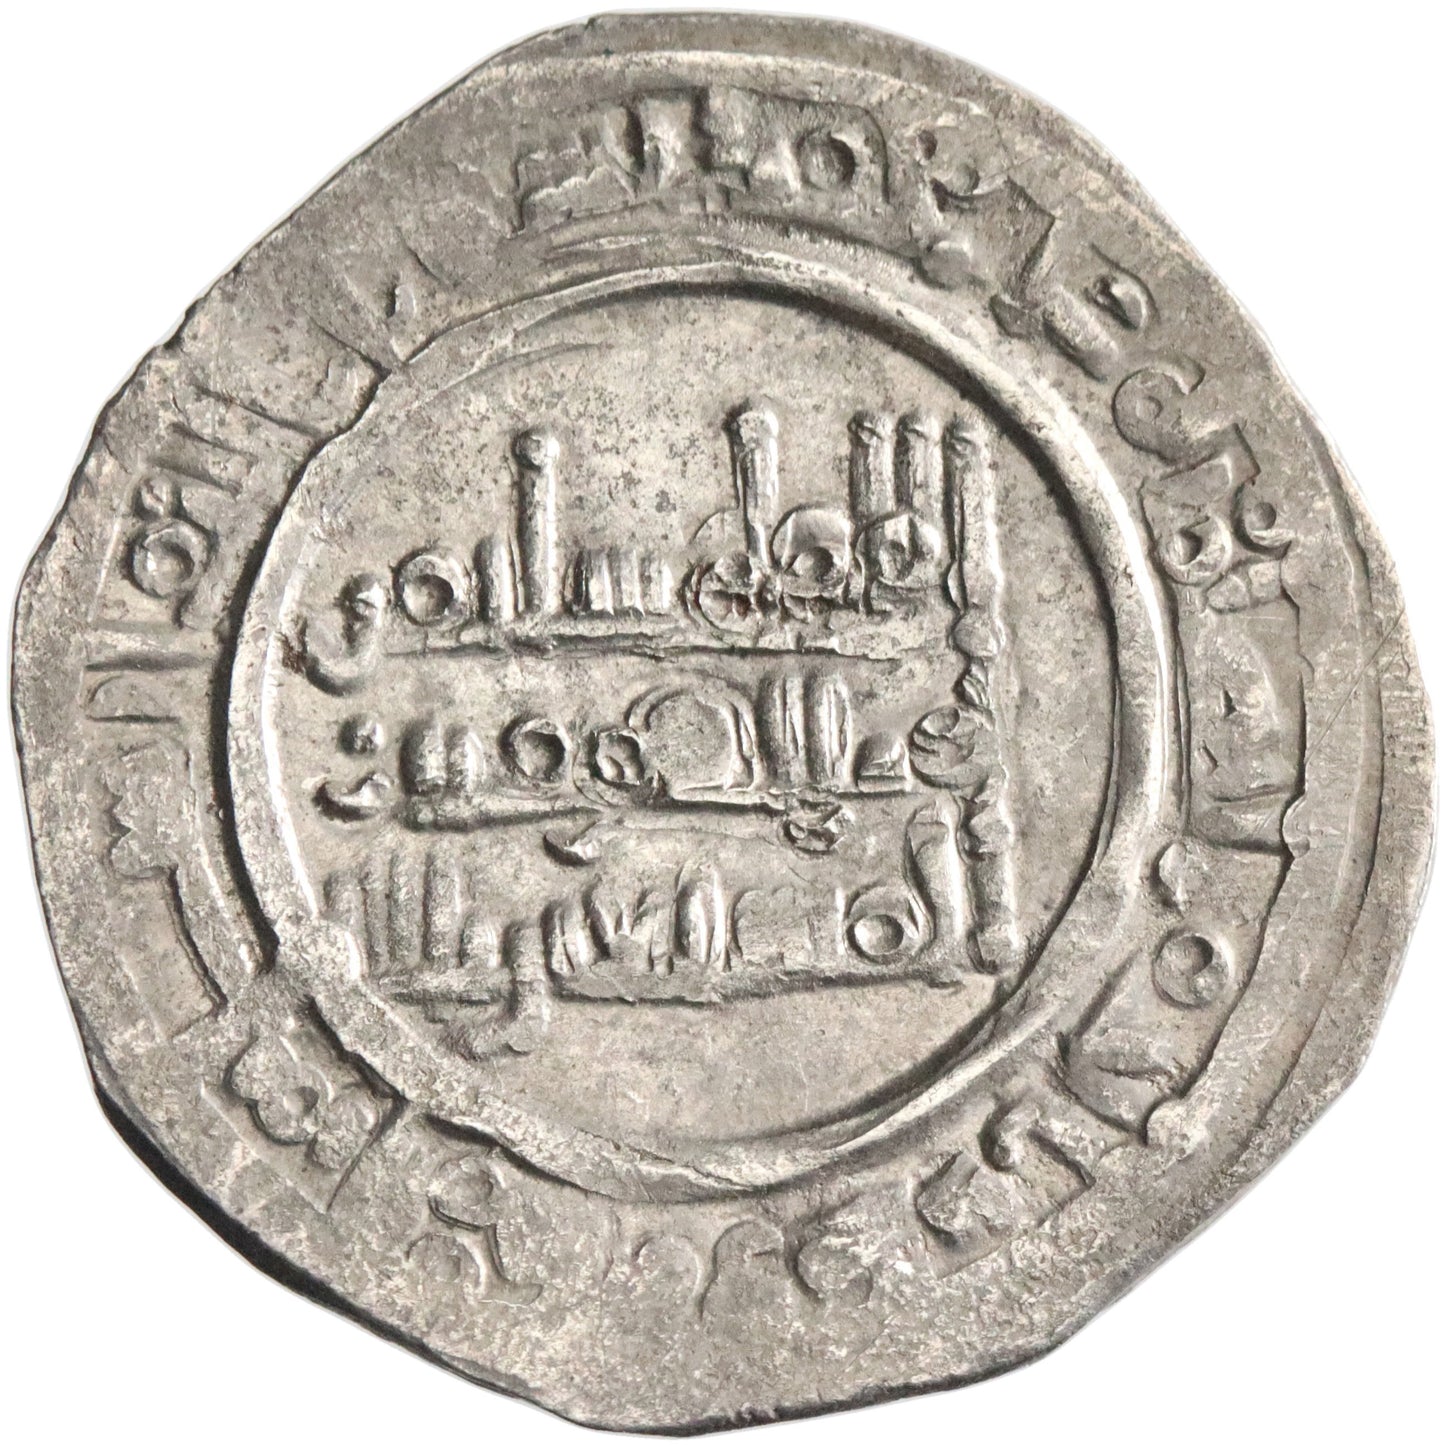 Umayyad of Spain: Sulayman, silver dirham (2.66g), al-Andalus (Spain) mint, AH 400. Citing Ibn Maslama.